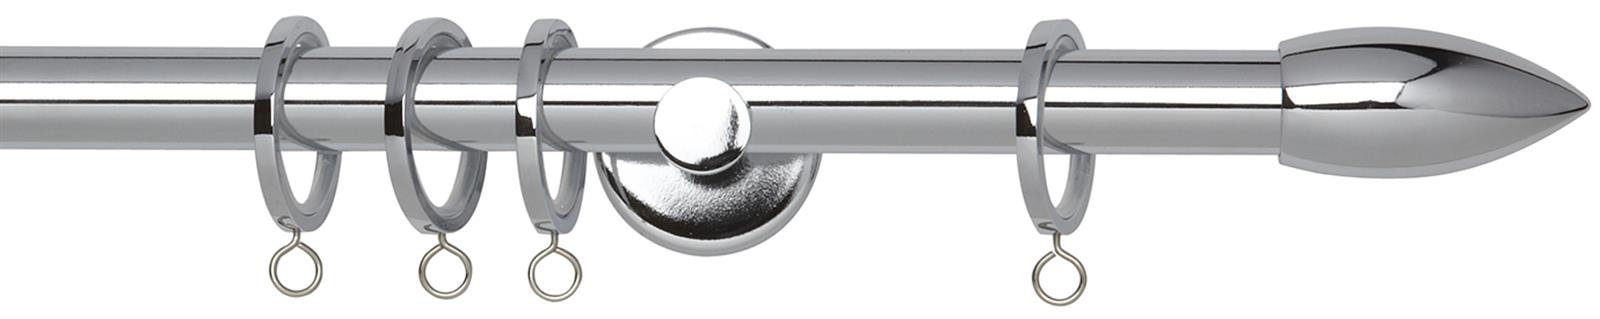 Neo 19mm Pole Chrome Bullet